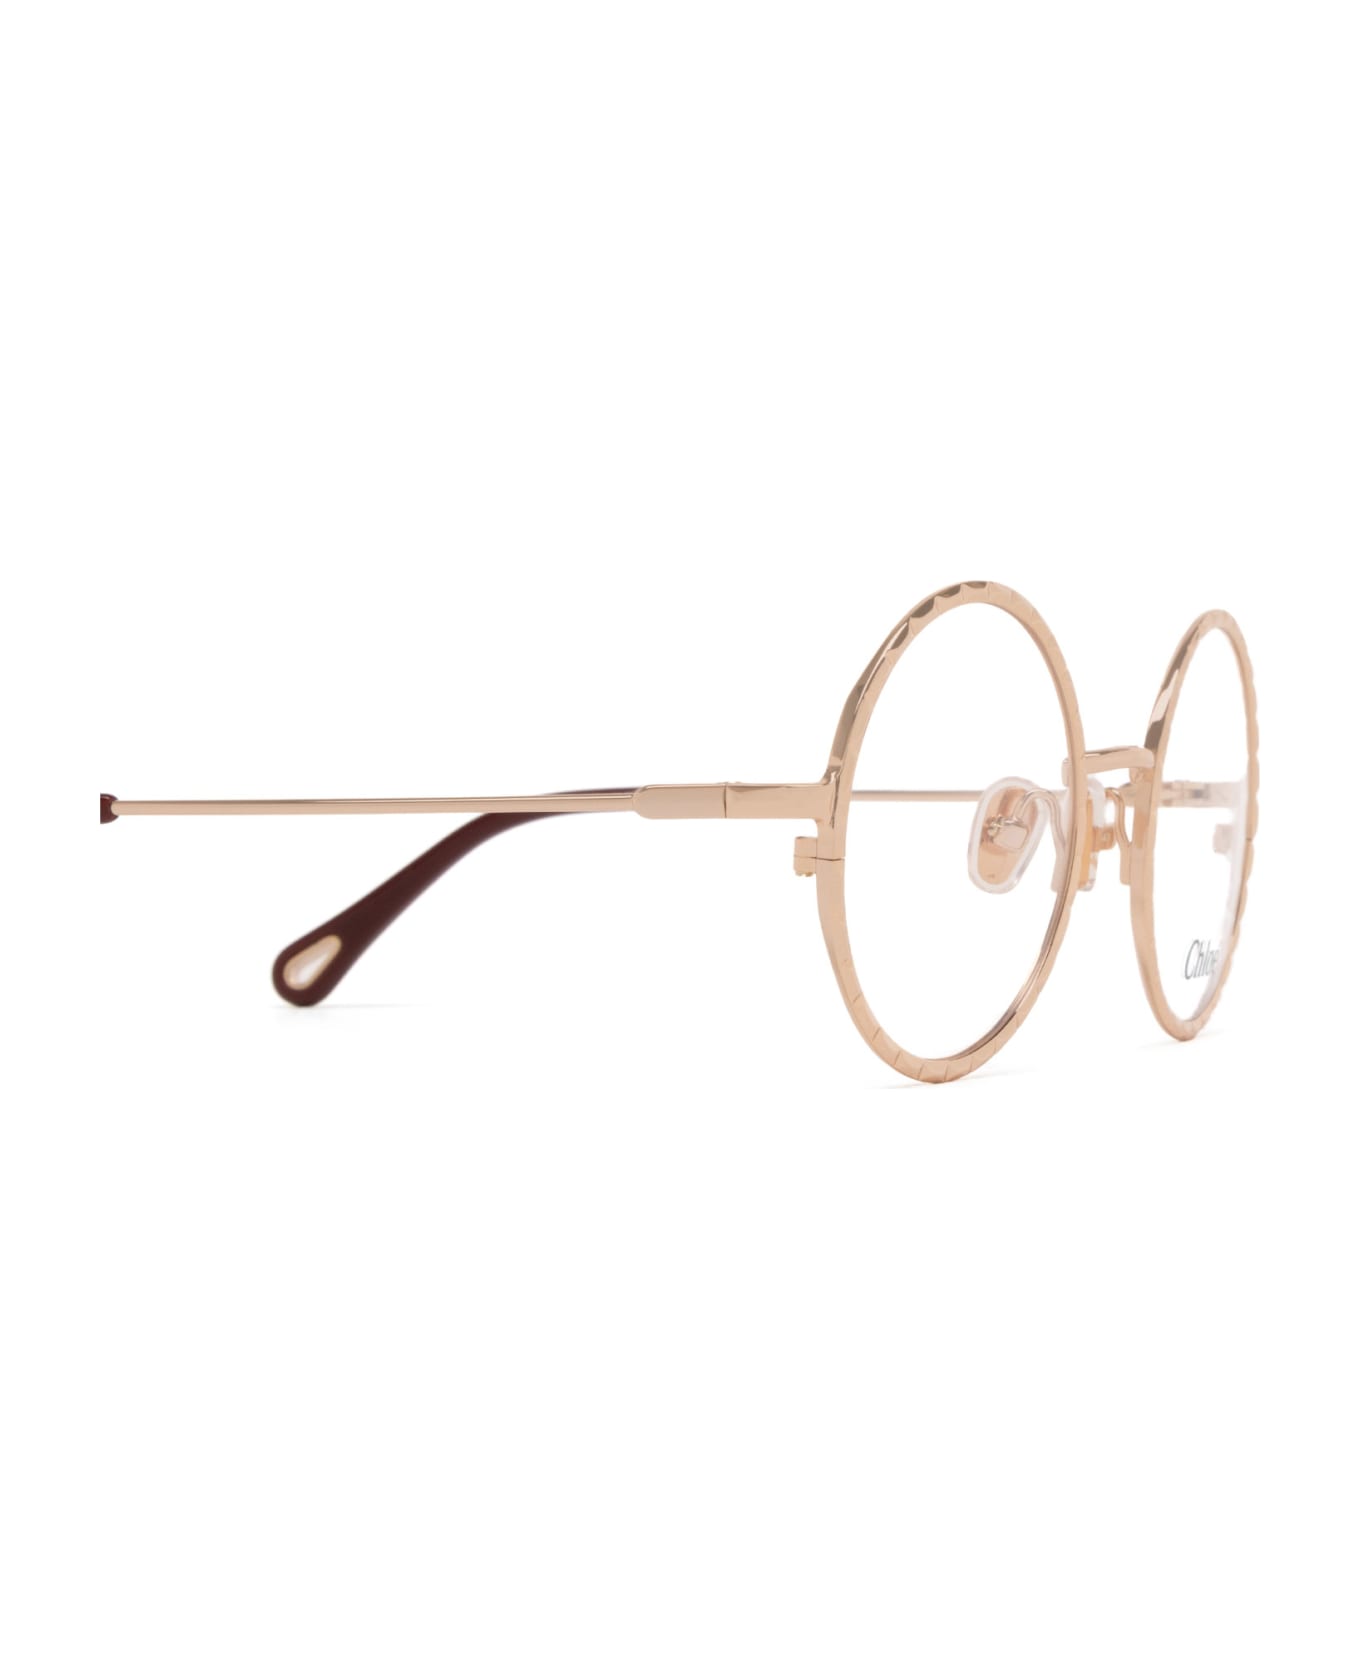 Chloé Eyewear Ch0232o Gold Glasses - Gold アイウェア